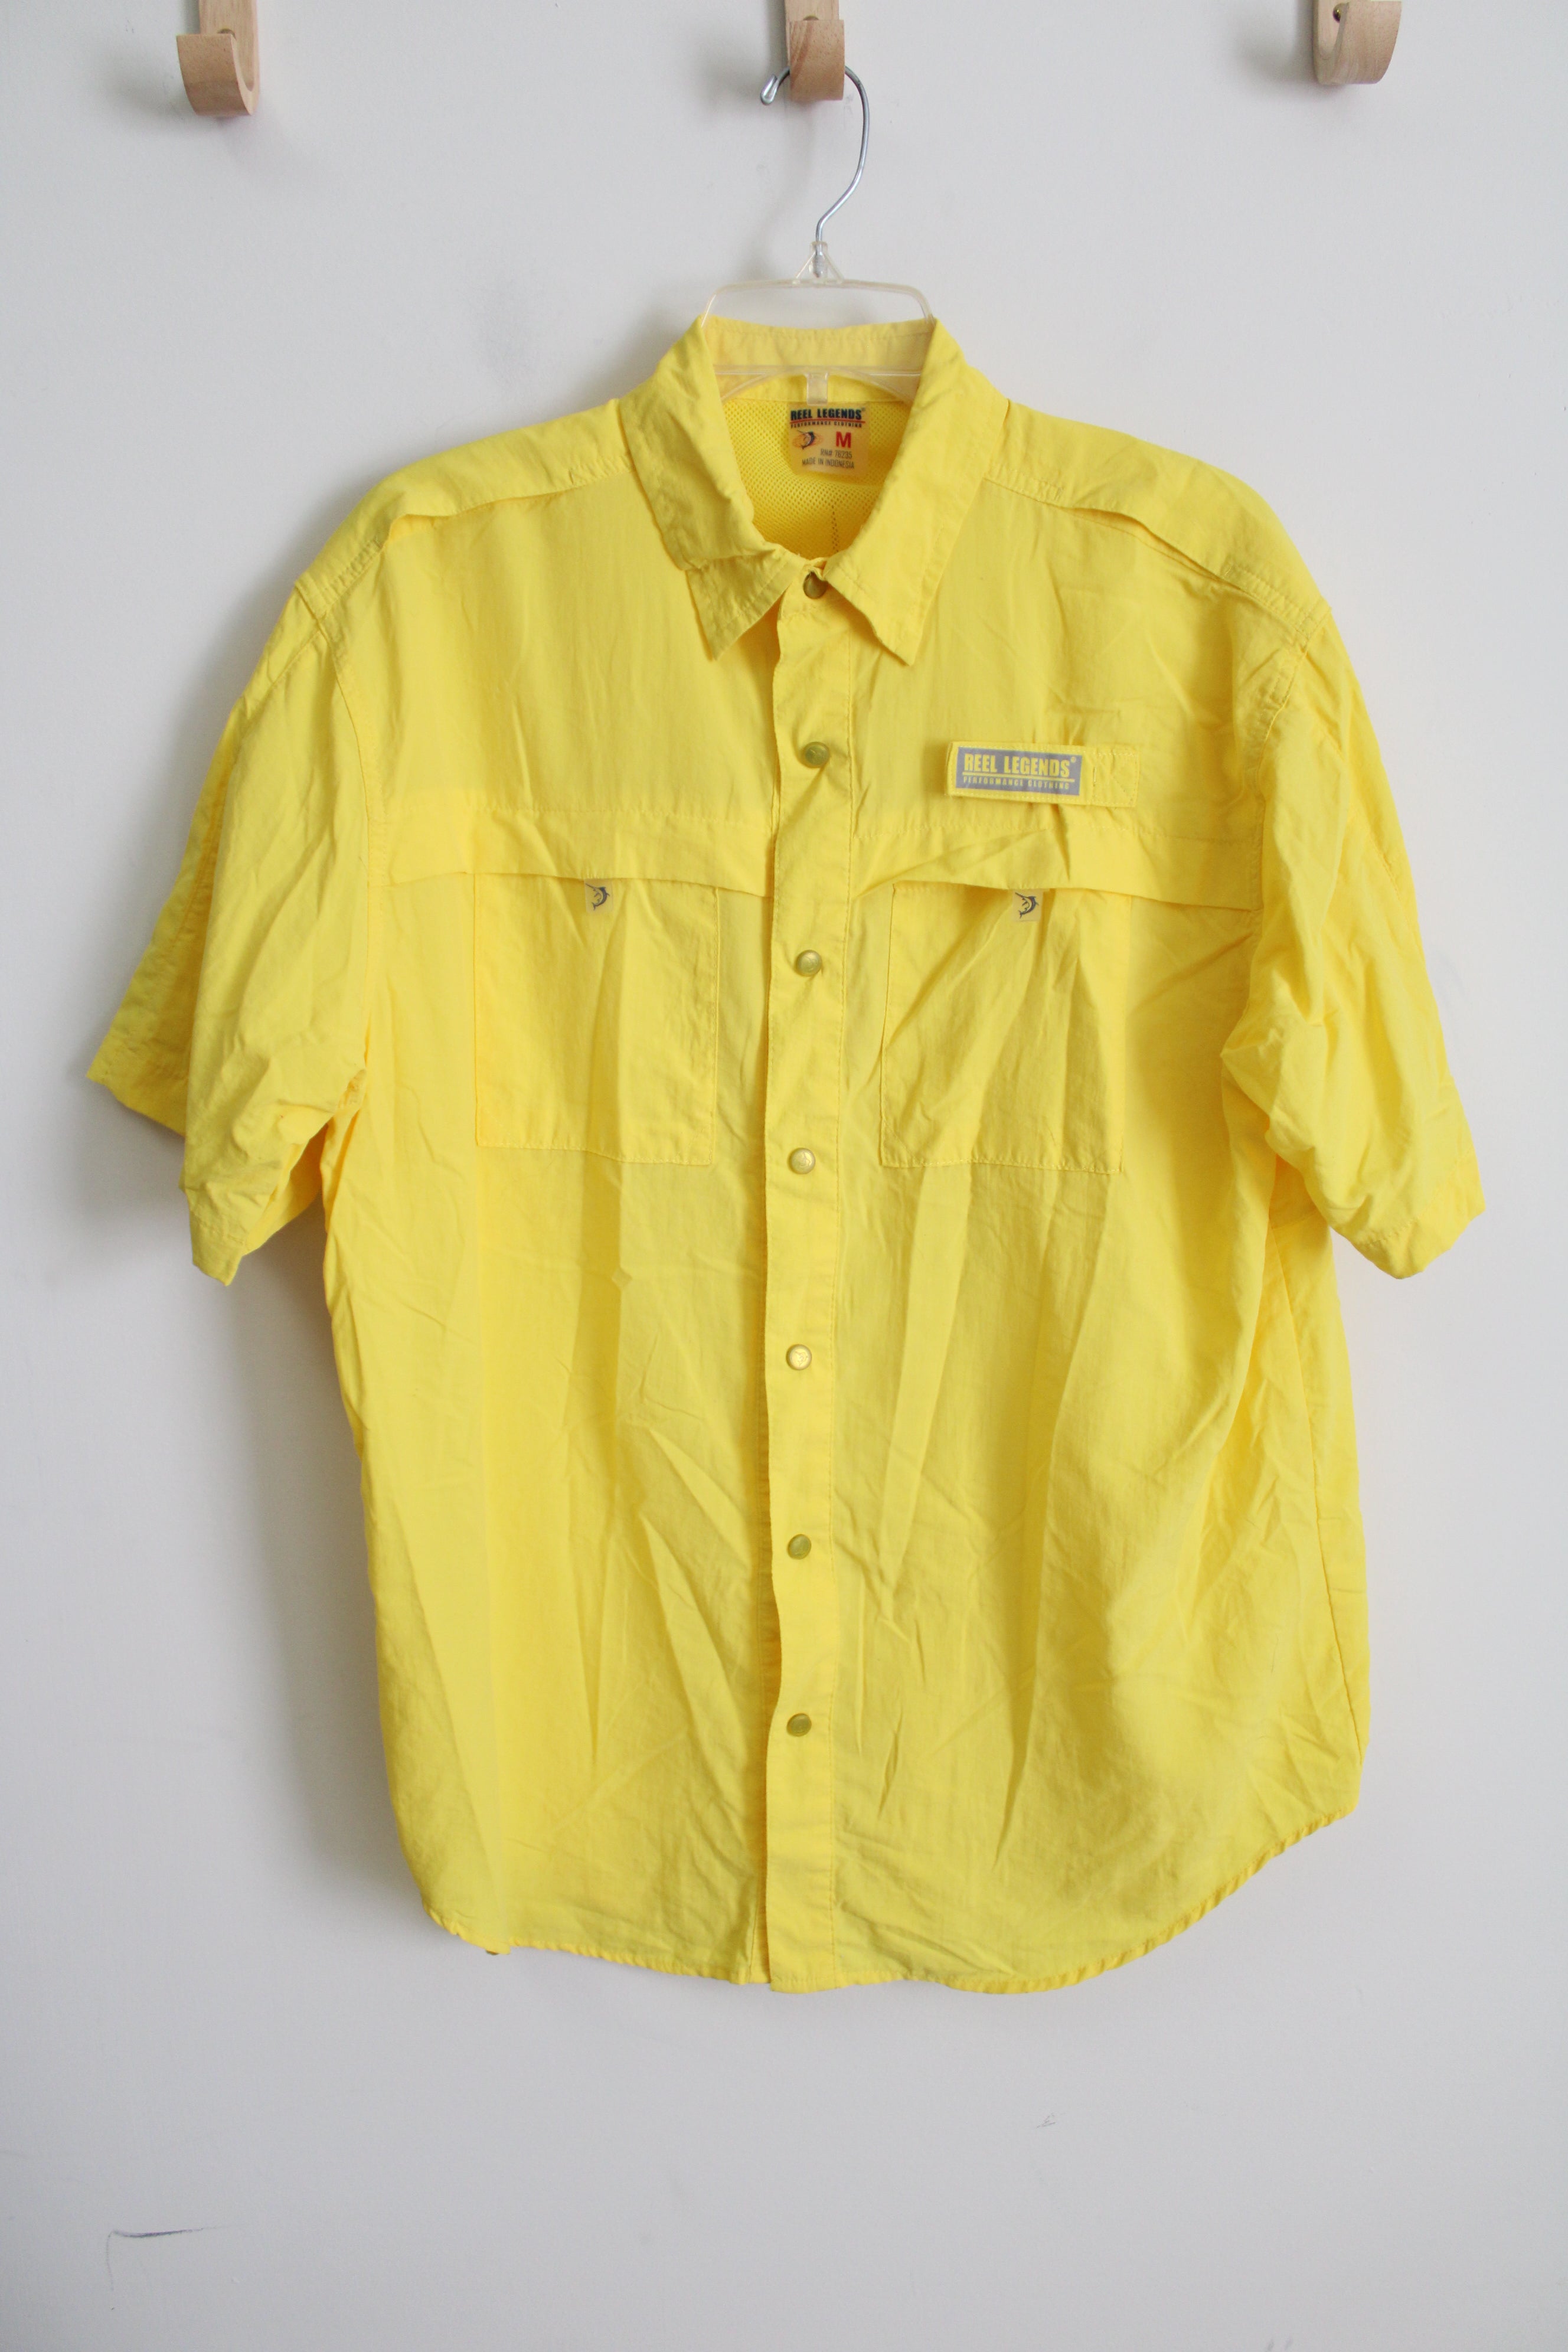 Reel Legends Yellow Fishing Shirt | M